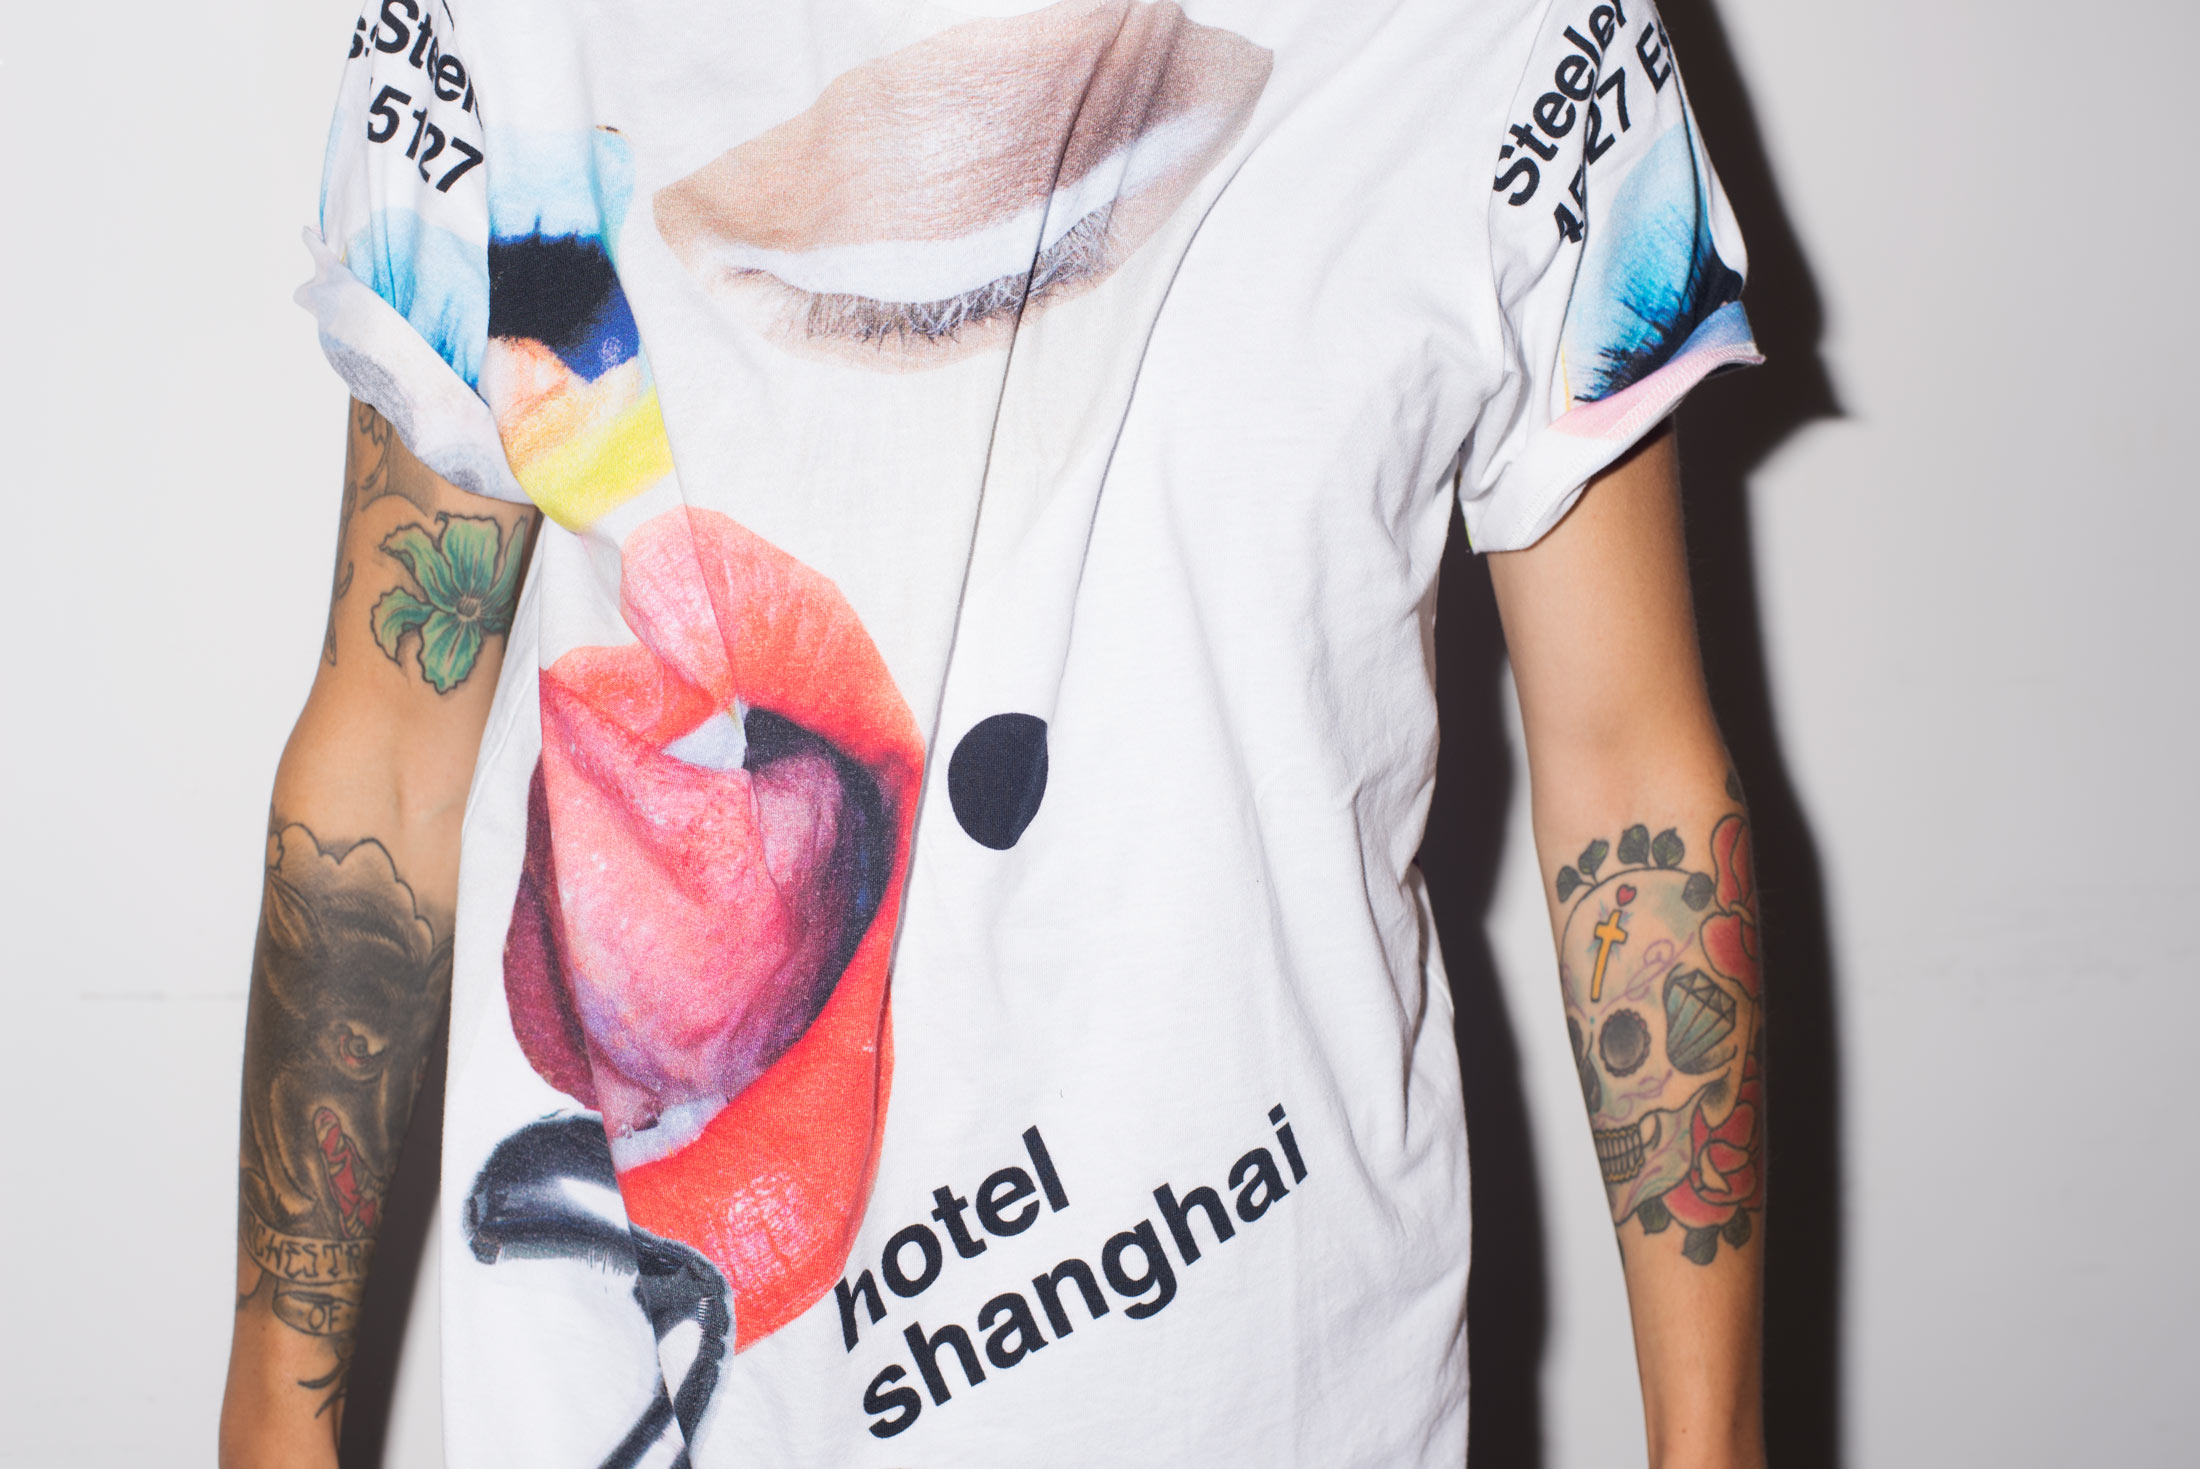 NikolasWrobel-HotelShanghai_Apparel-T-Shirt-Campaign